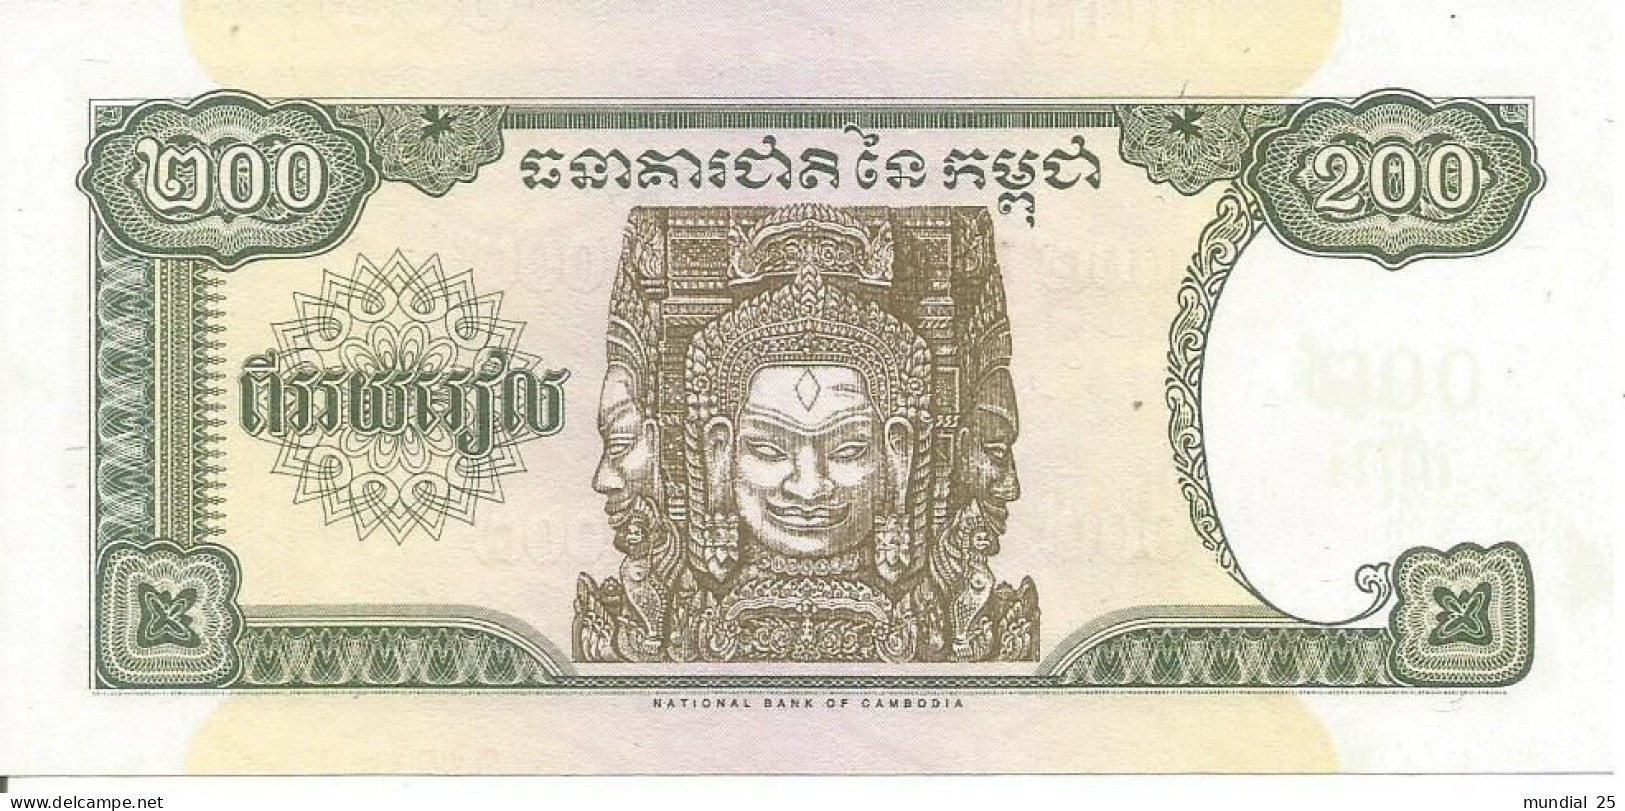 2 CAMBODIA NOTES 200 RIELS 1998 - Cambodia